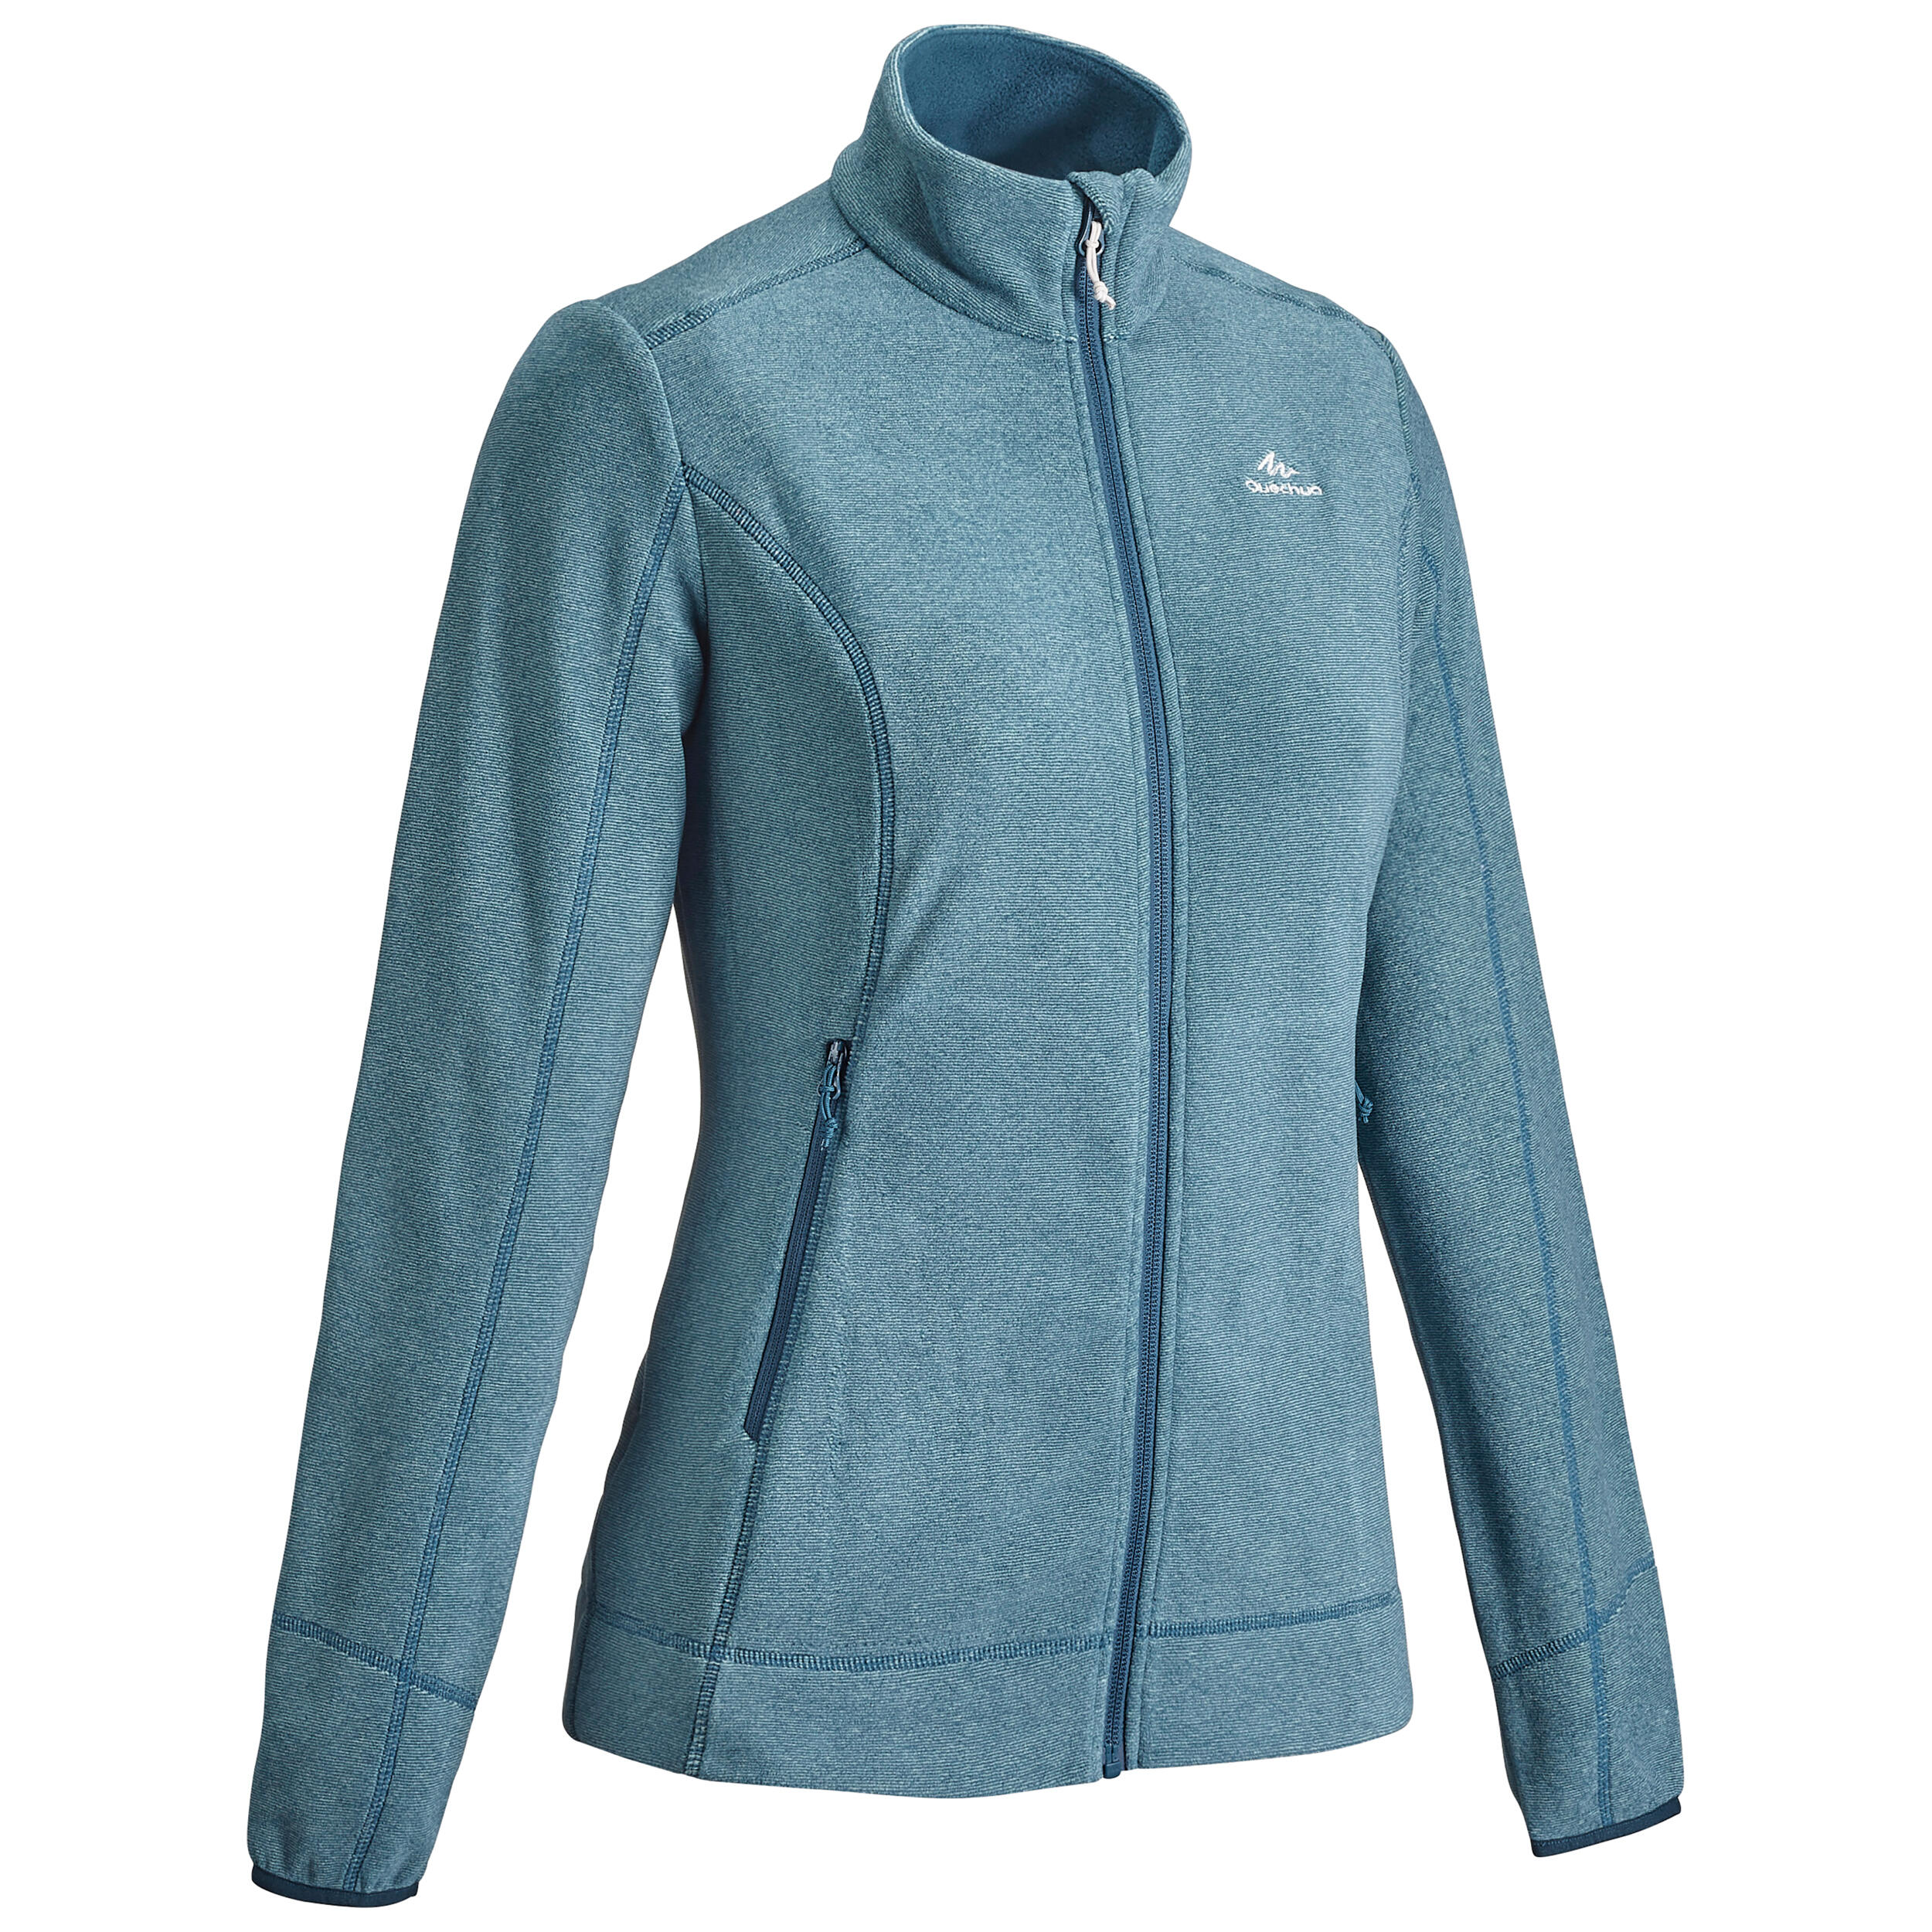 Buy Women's Blue Hiking Fleece Jacket Online | Decathlon